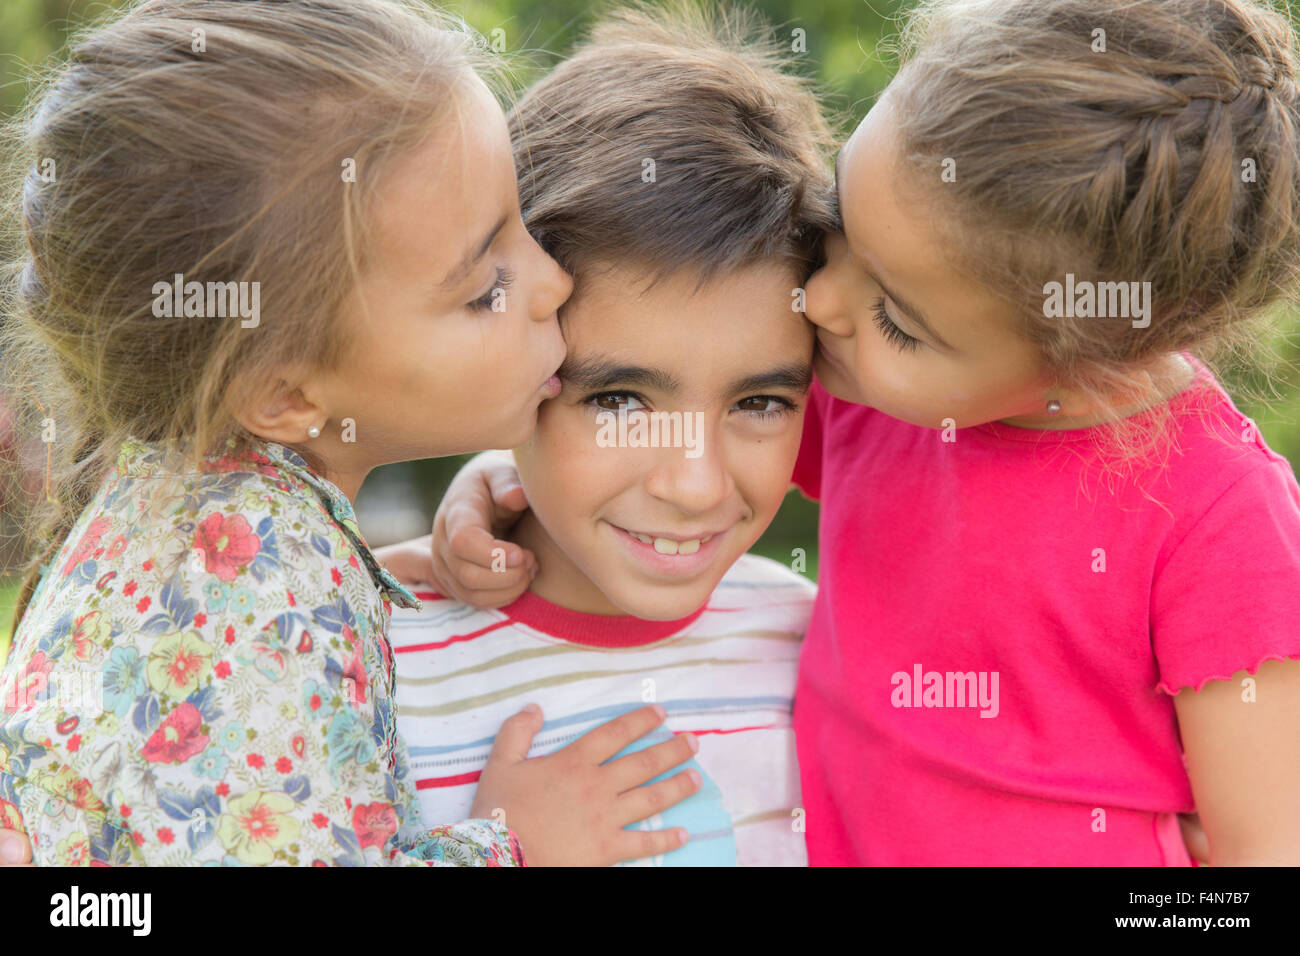 Two little girls kissing a boy Stock Photo